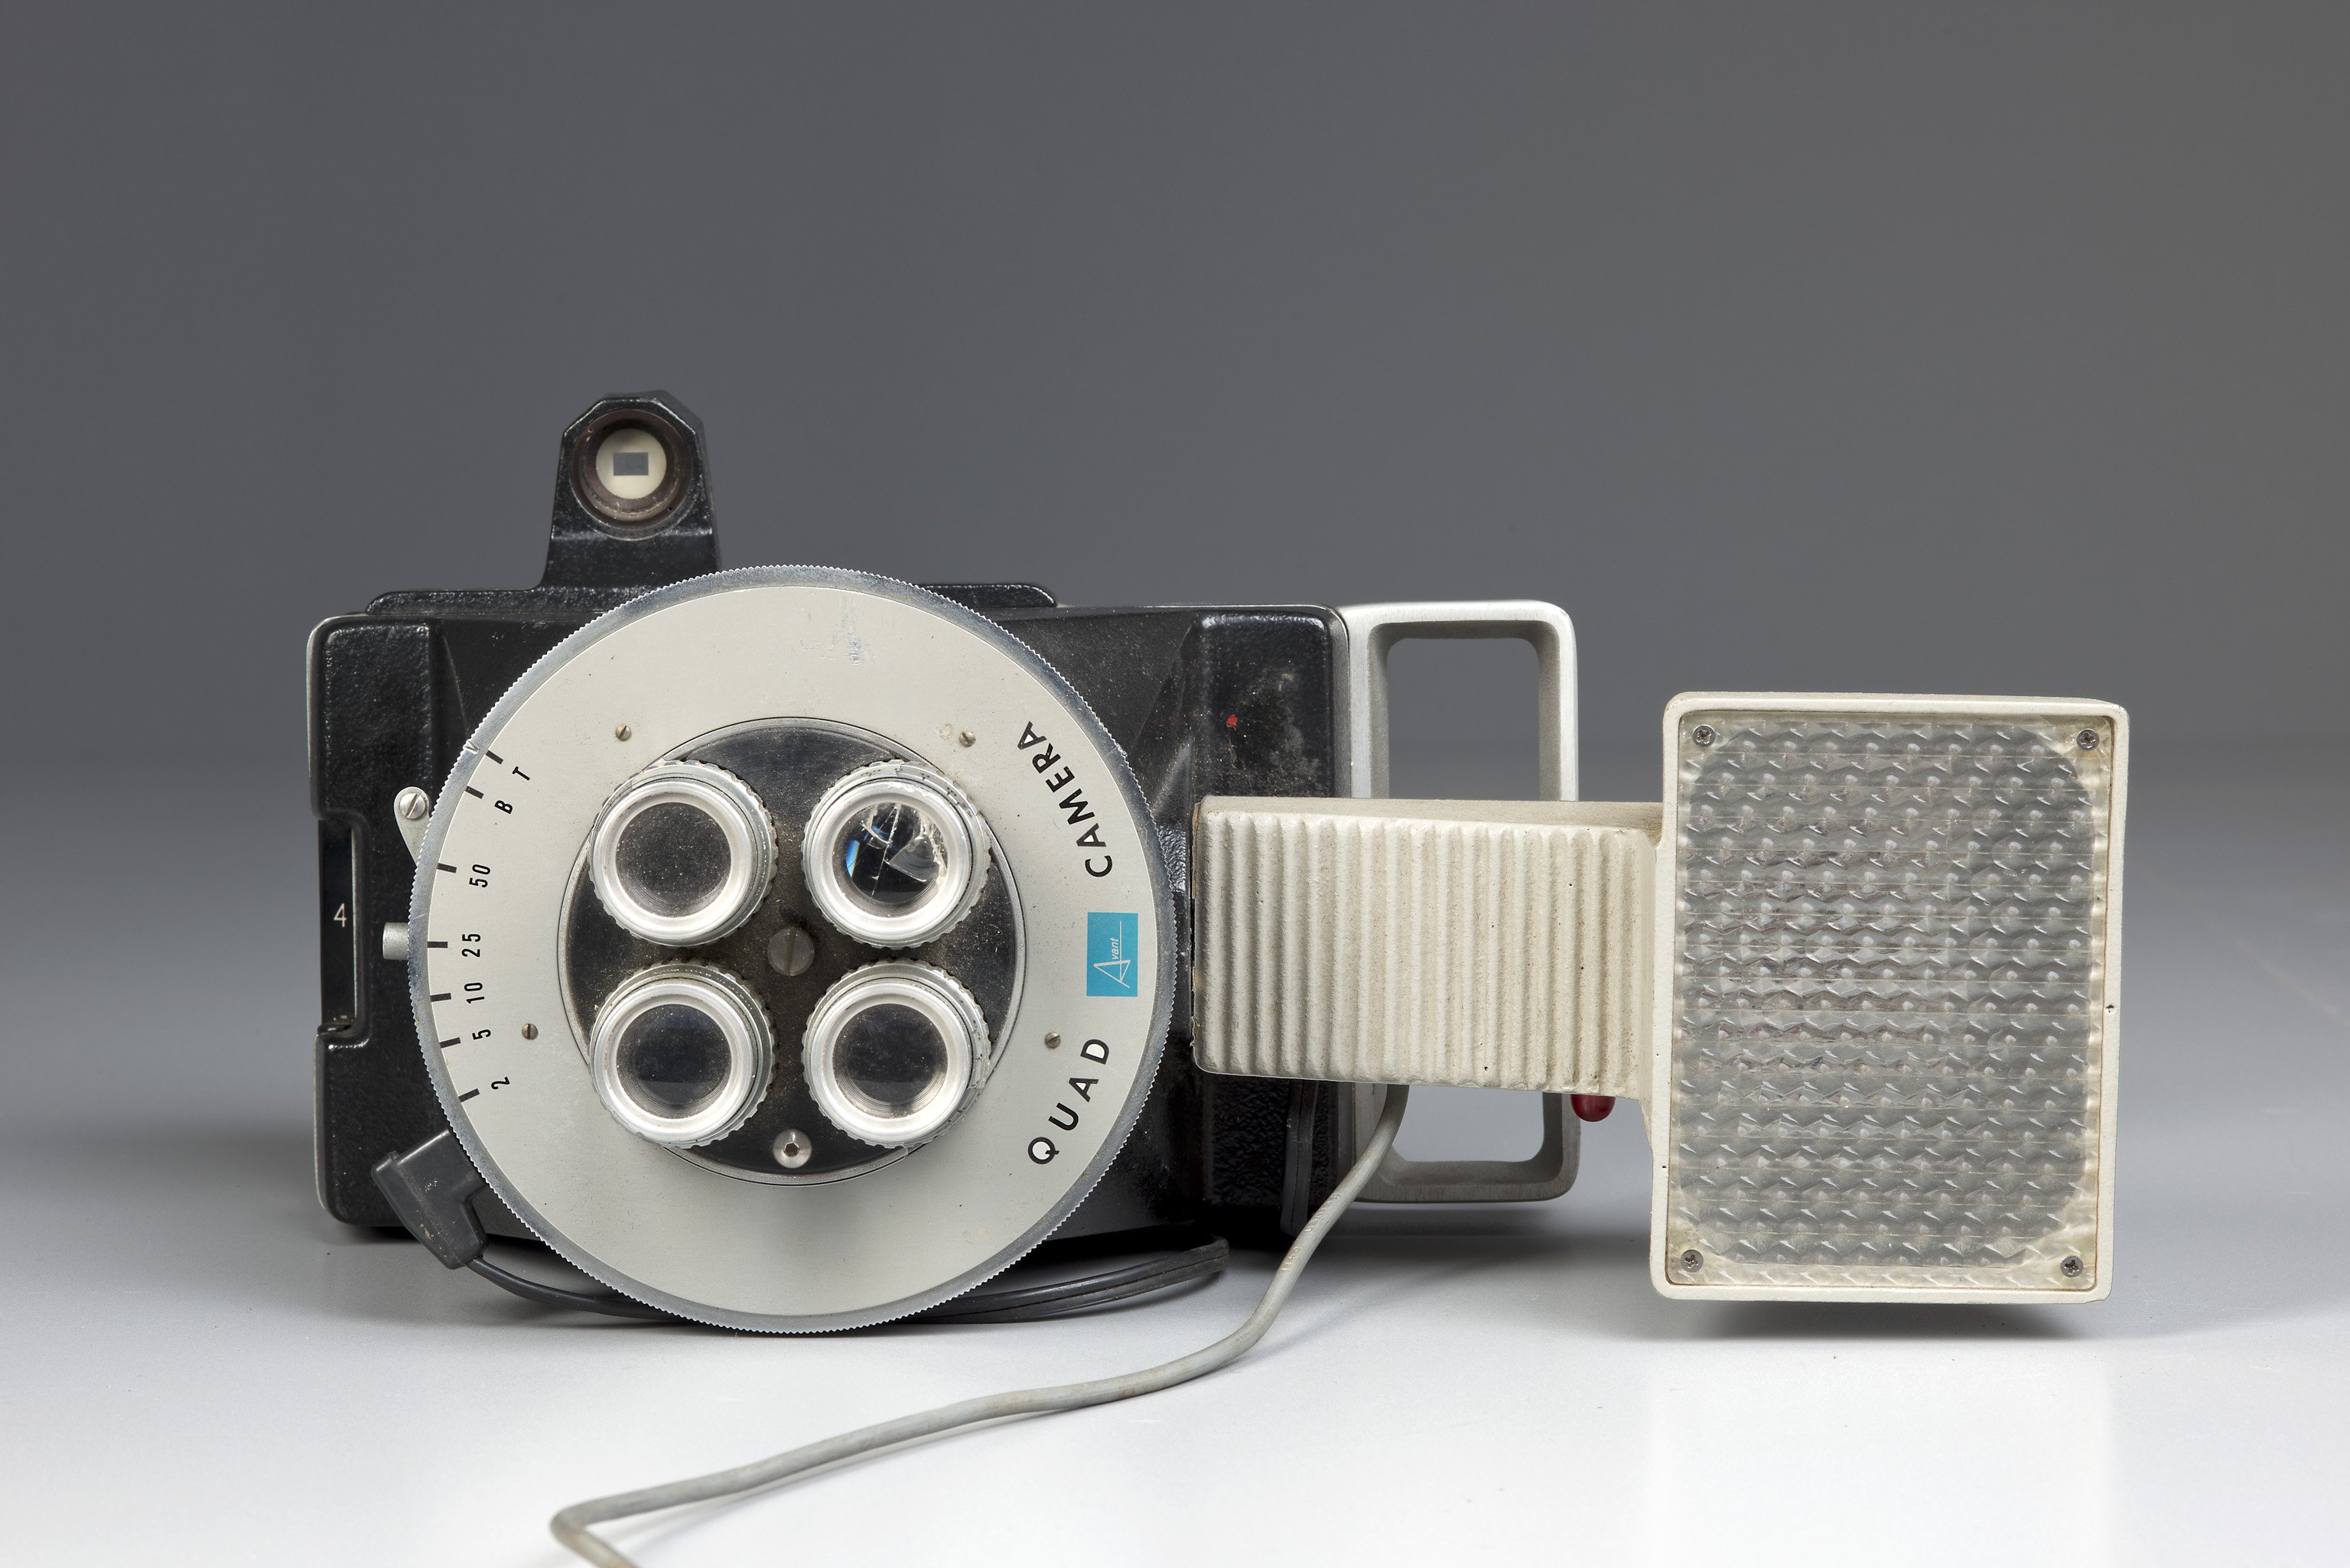 Sofortbildkamera Polaroid Quad Camera (Freilichtmuseum Roscheider Hof CC0)